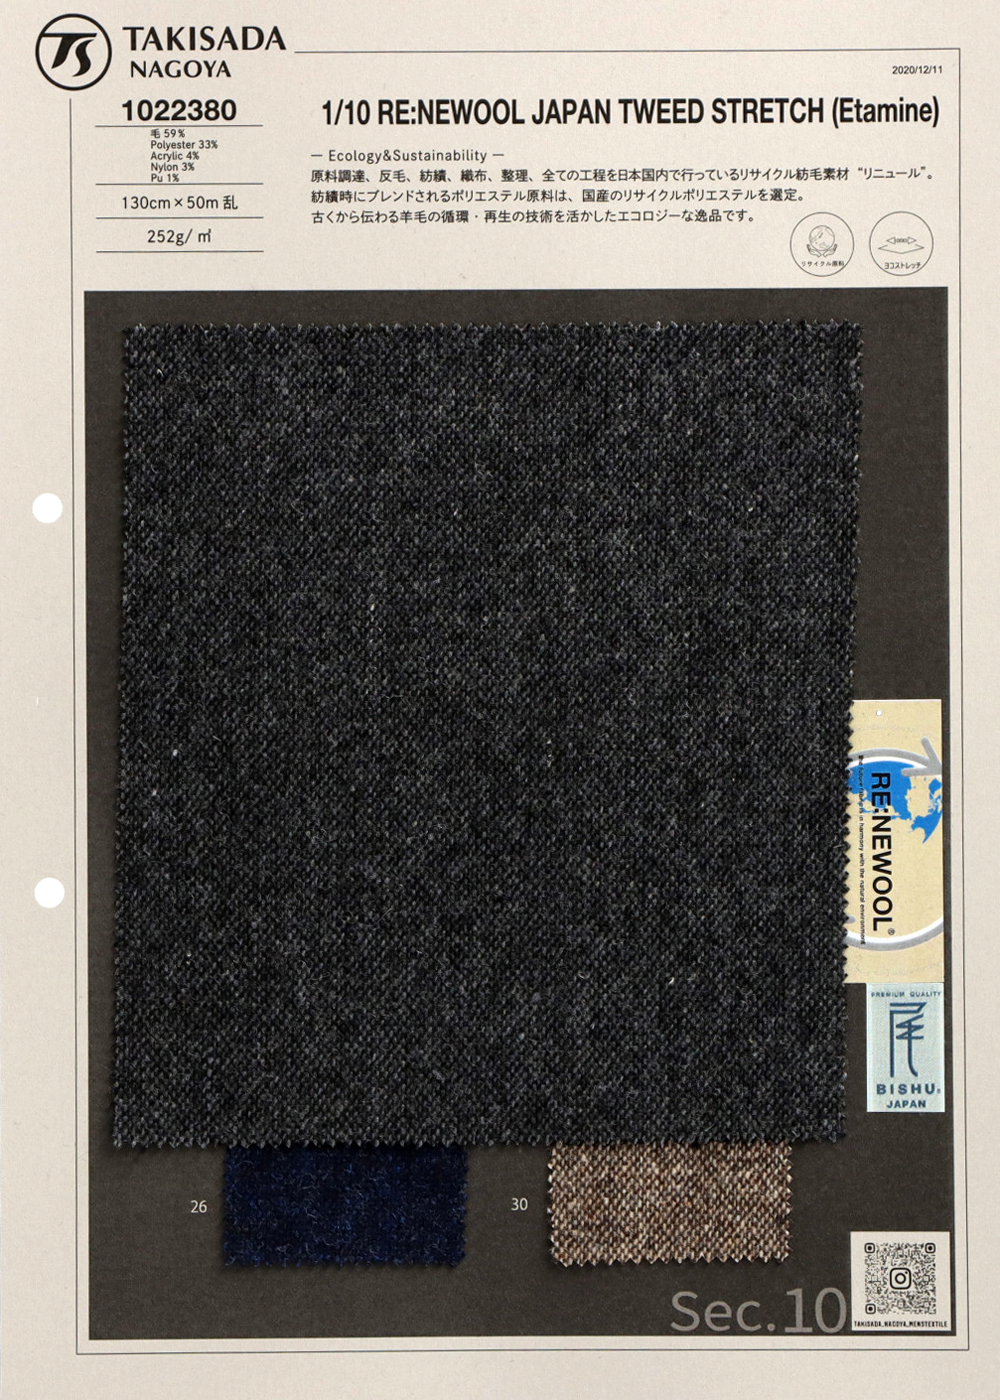 1022380 1/10 RE:NEWOOL® Stretch Home Spun[Textile / Fabric] Takisada Nagoya